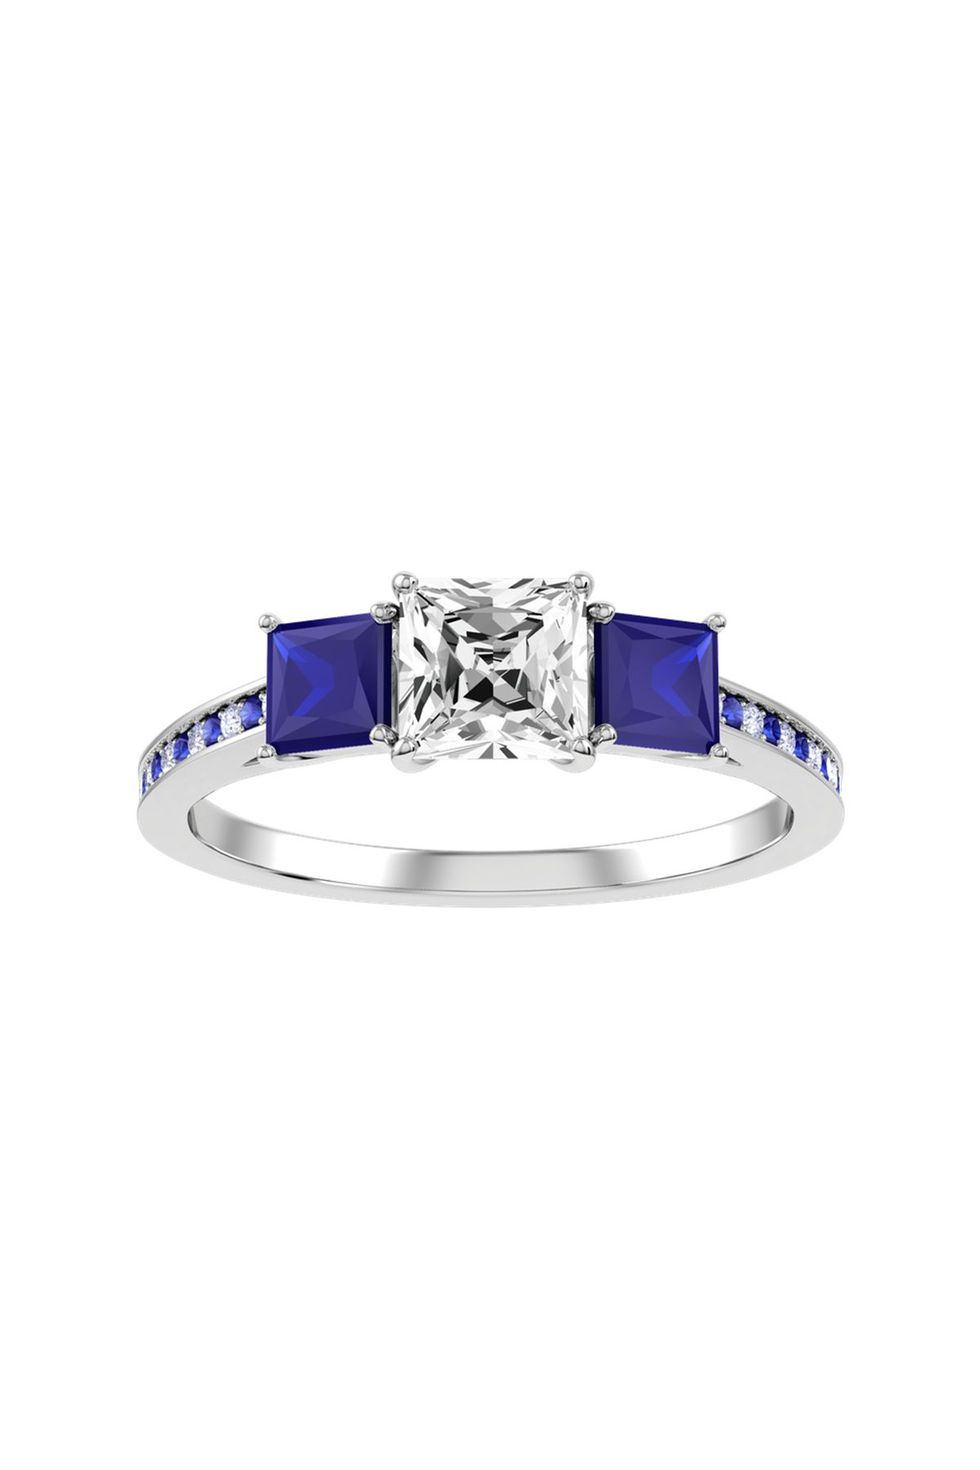 Sapphire Engagement Rings - 14 Sapphire Engagement Rings We Love